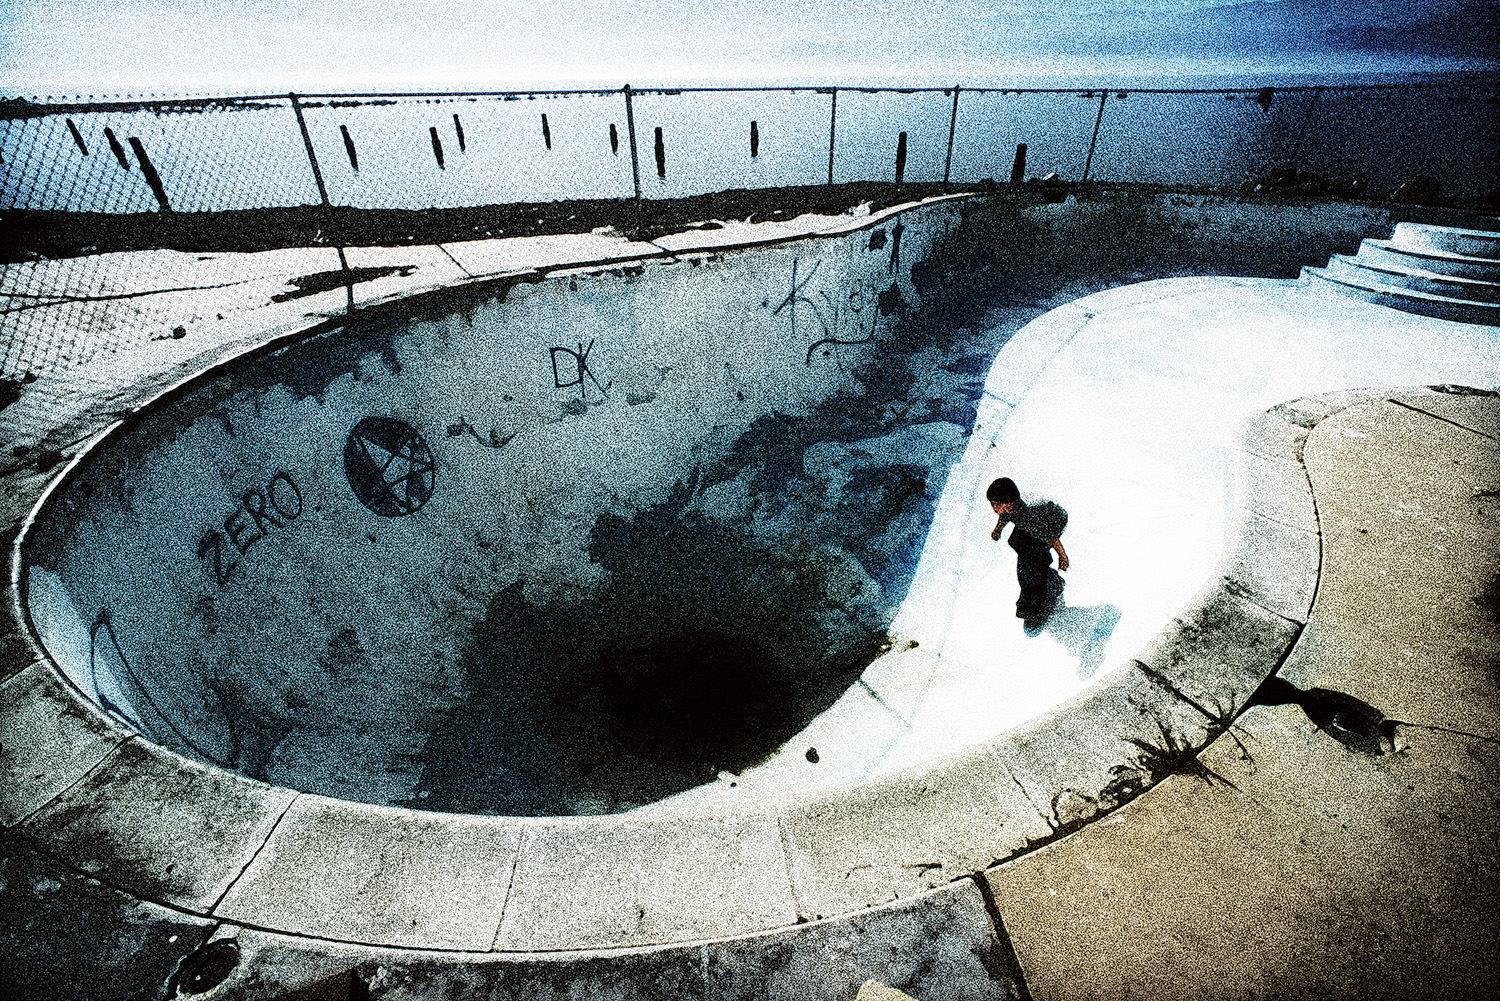 skateboarder-empty-pool-lifestyle-photography-studio-3